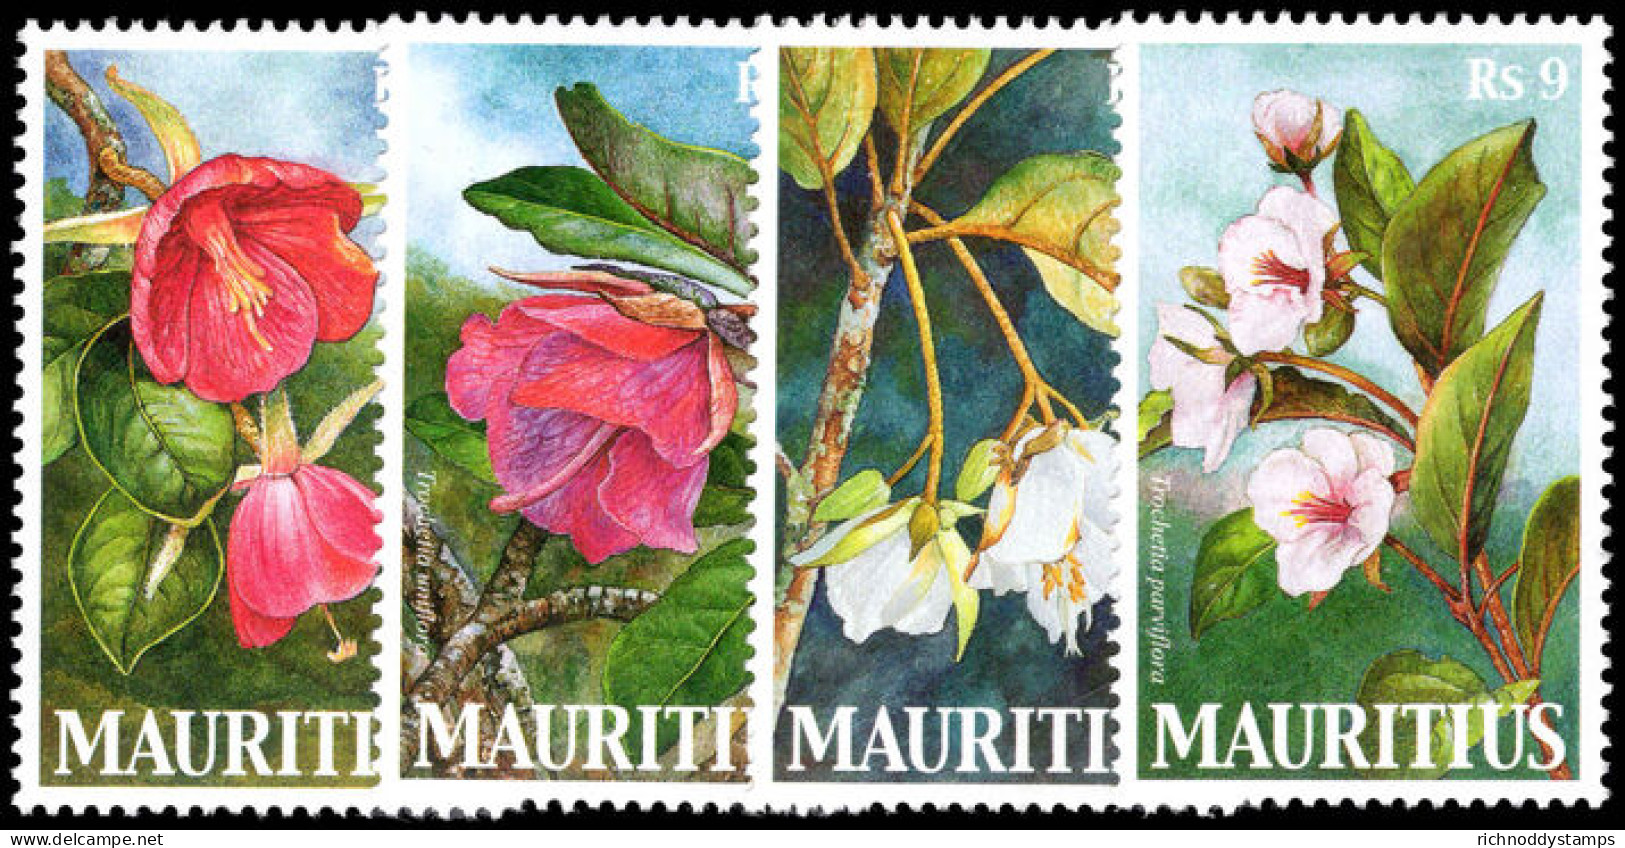 Mauritius 2003 Trochetias Unmounted Mint. - Maurice (1968-...)